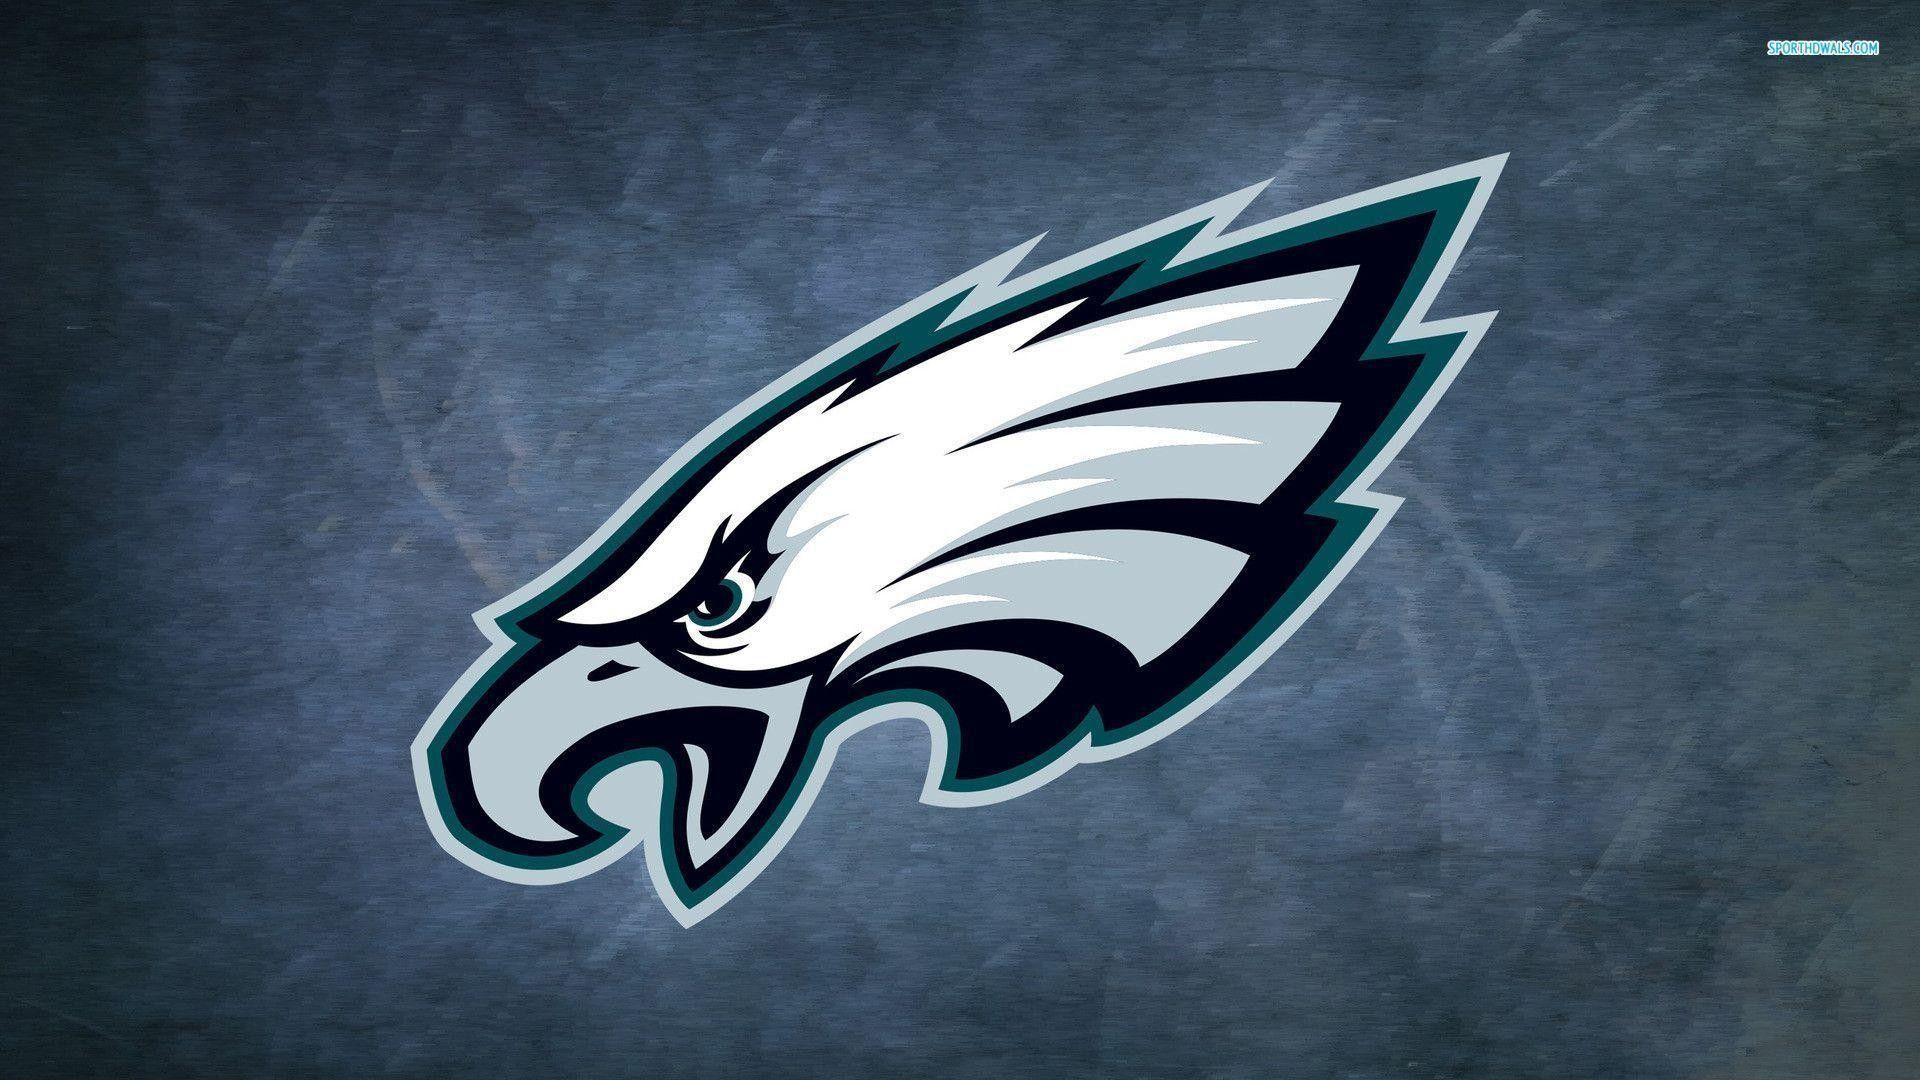 Philadelphia Eagles Wallpaper background picture